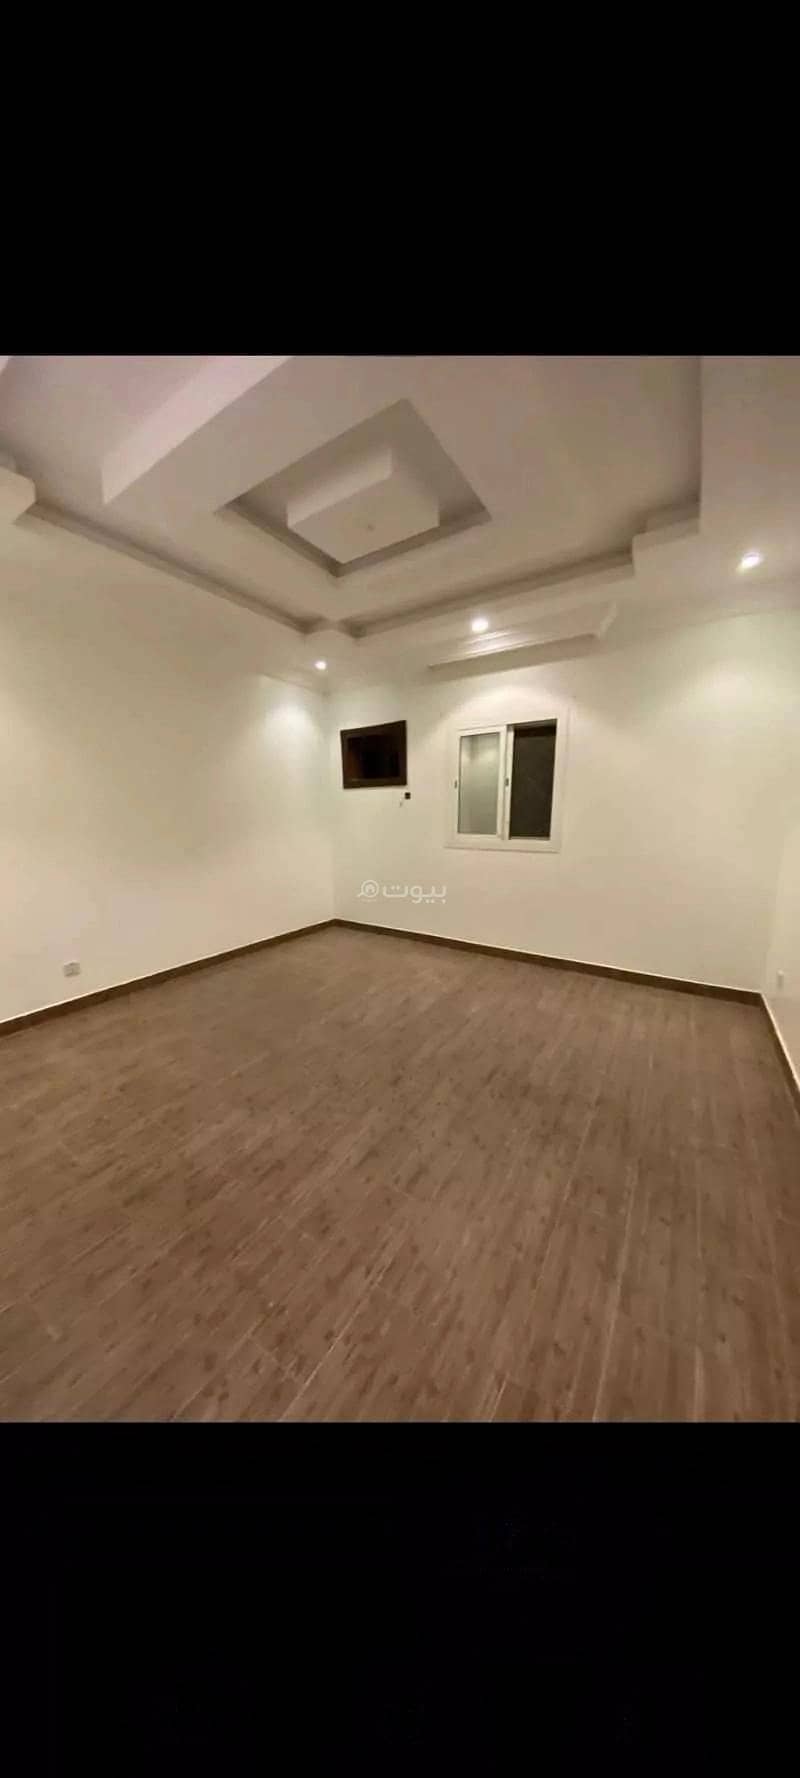 4 Room Apartment For Rent Abi Al Azhar Al Awsy Street, Jeddah